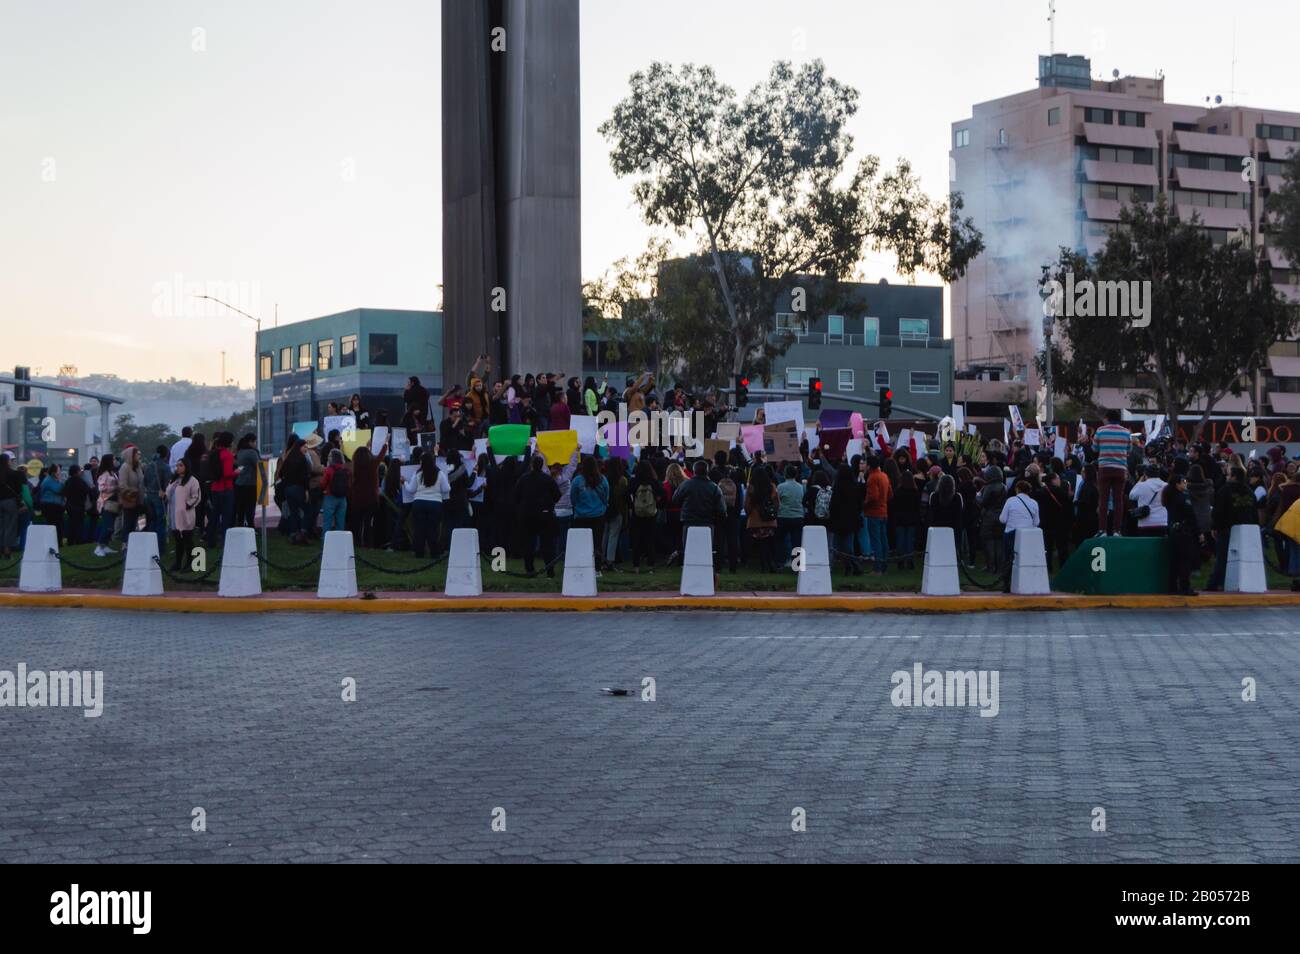 TIJUANA, MEXICO - 02/15/2020: Protest against feminicide in Mexico Stock Photo